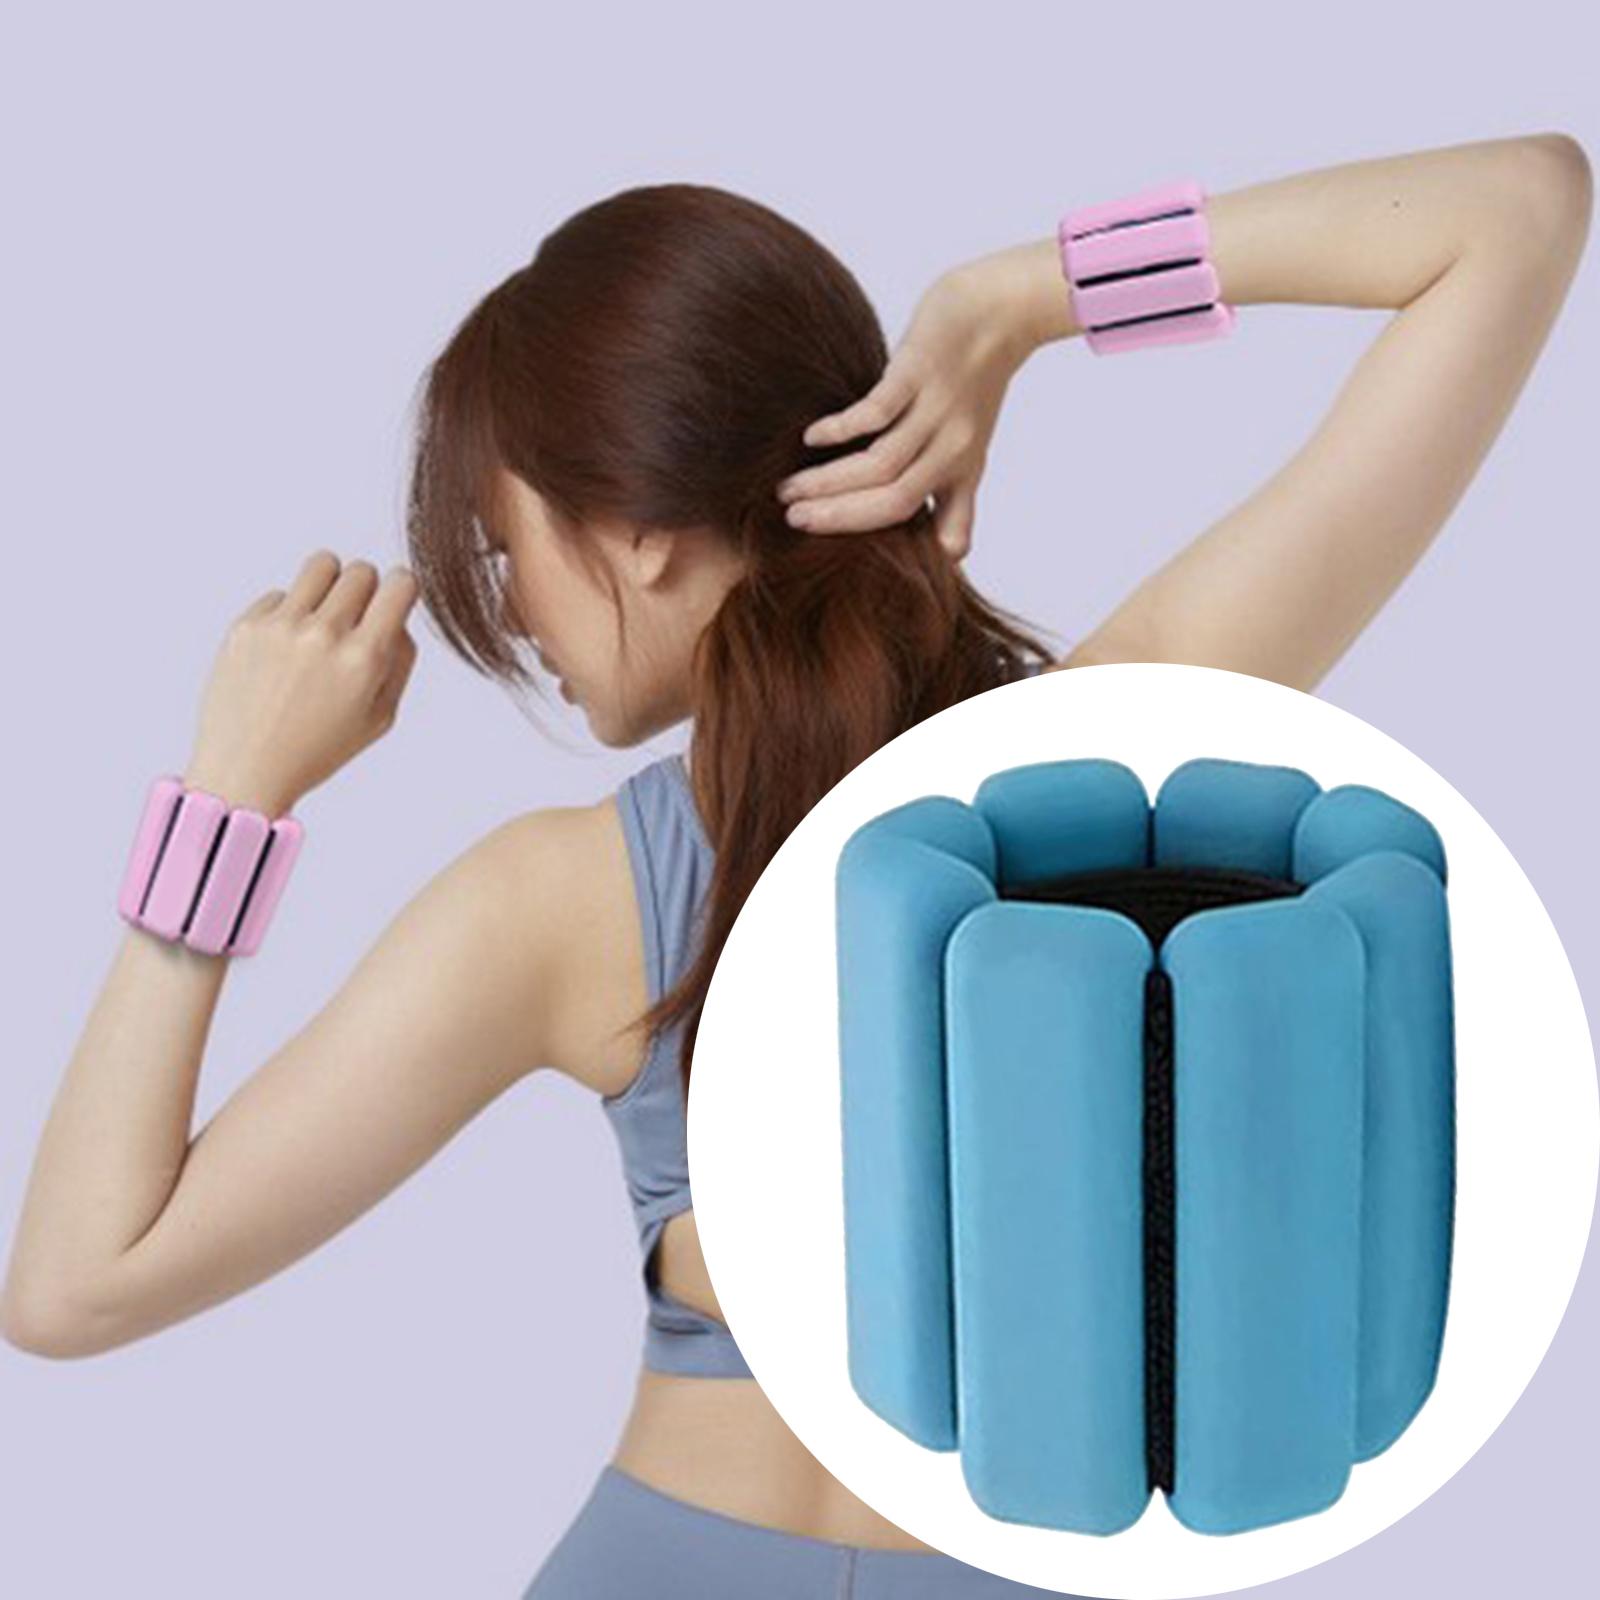 Wrist Weights Bracelet Gym Exercise Yoga Fitness Training Running Blue 1pc